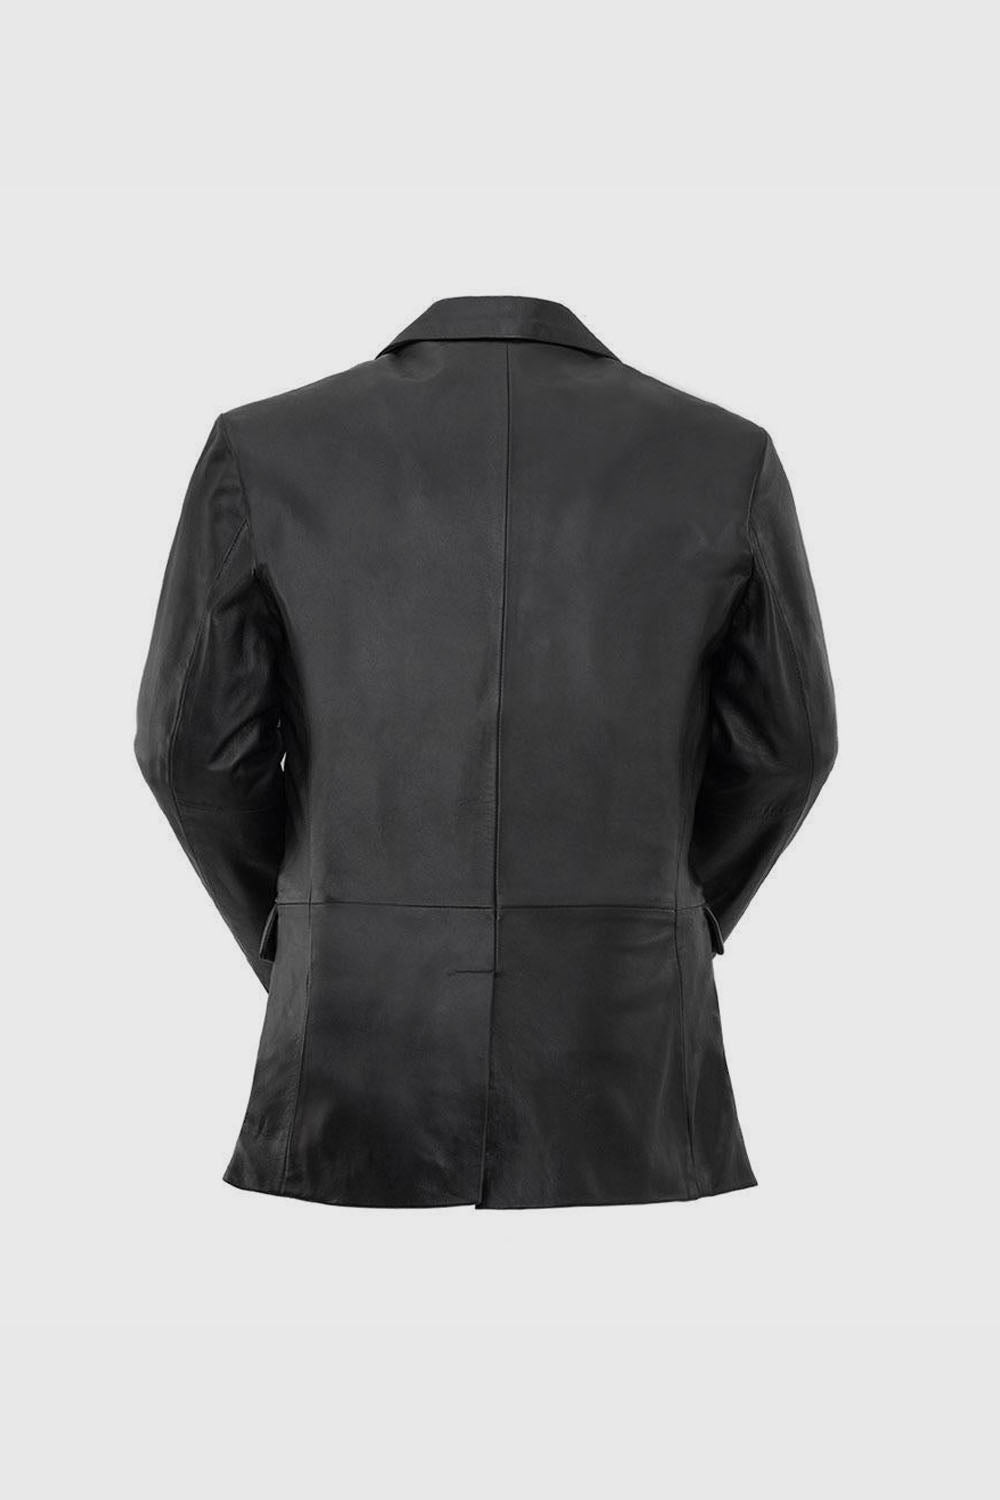 Esquire Mens Leather Jacket Black